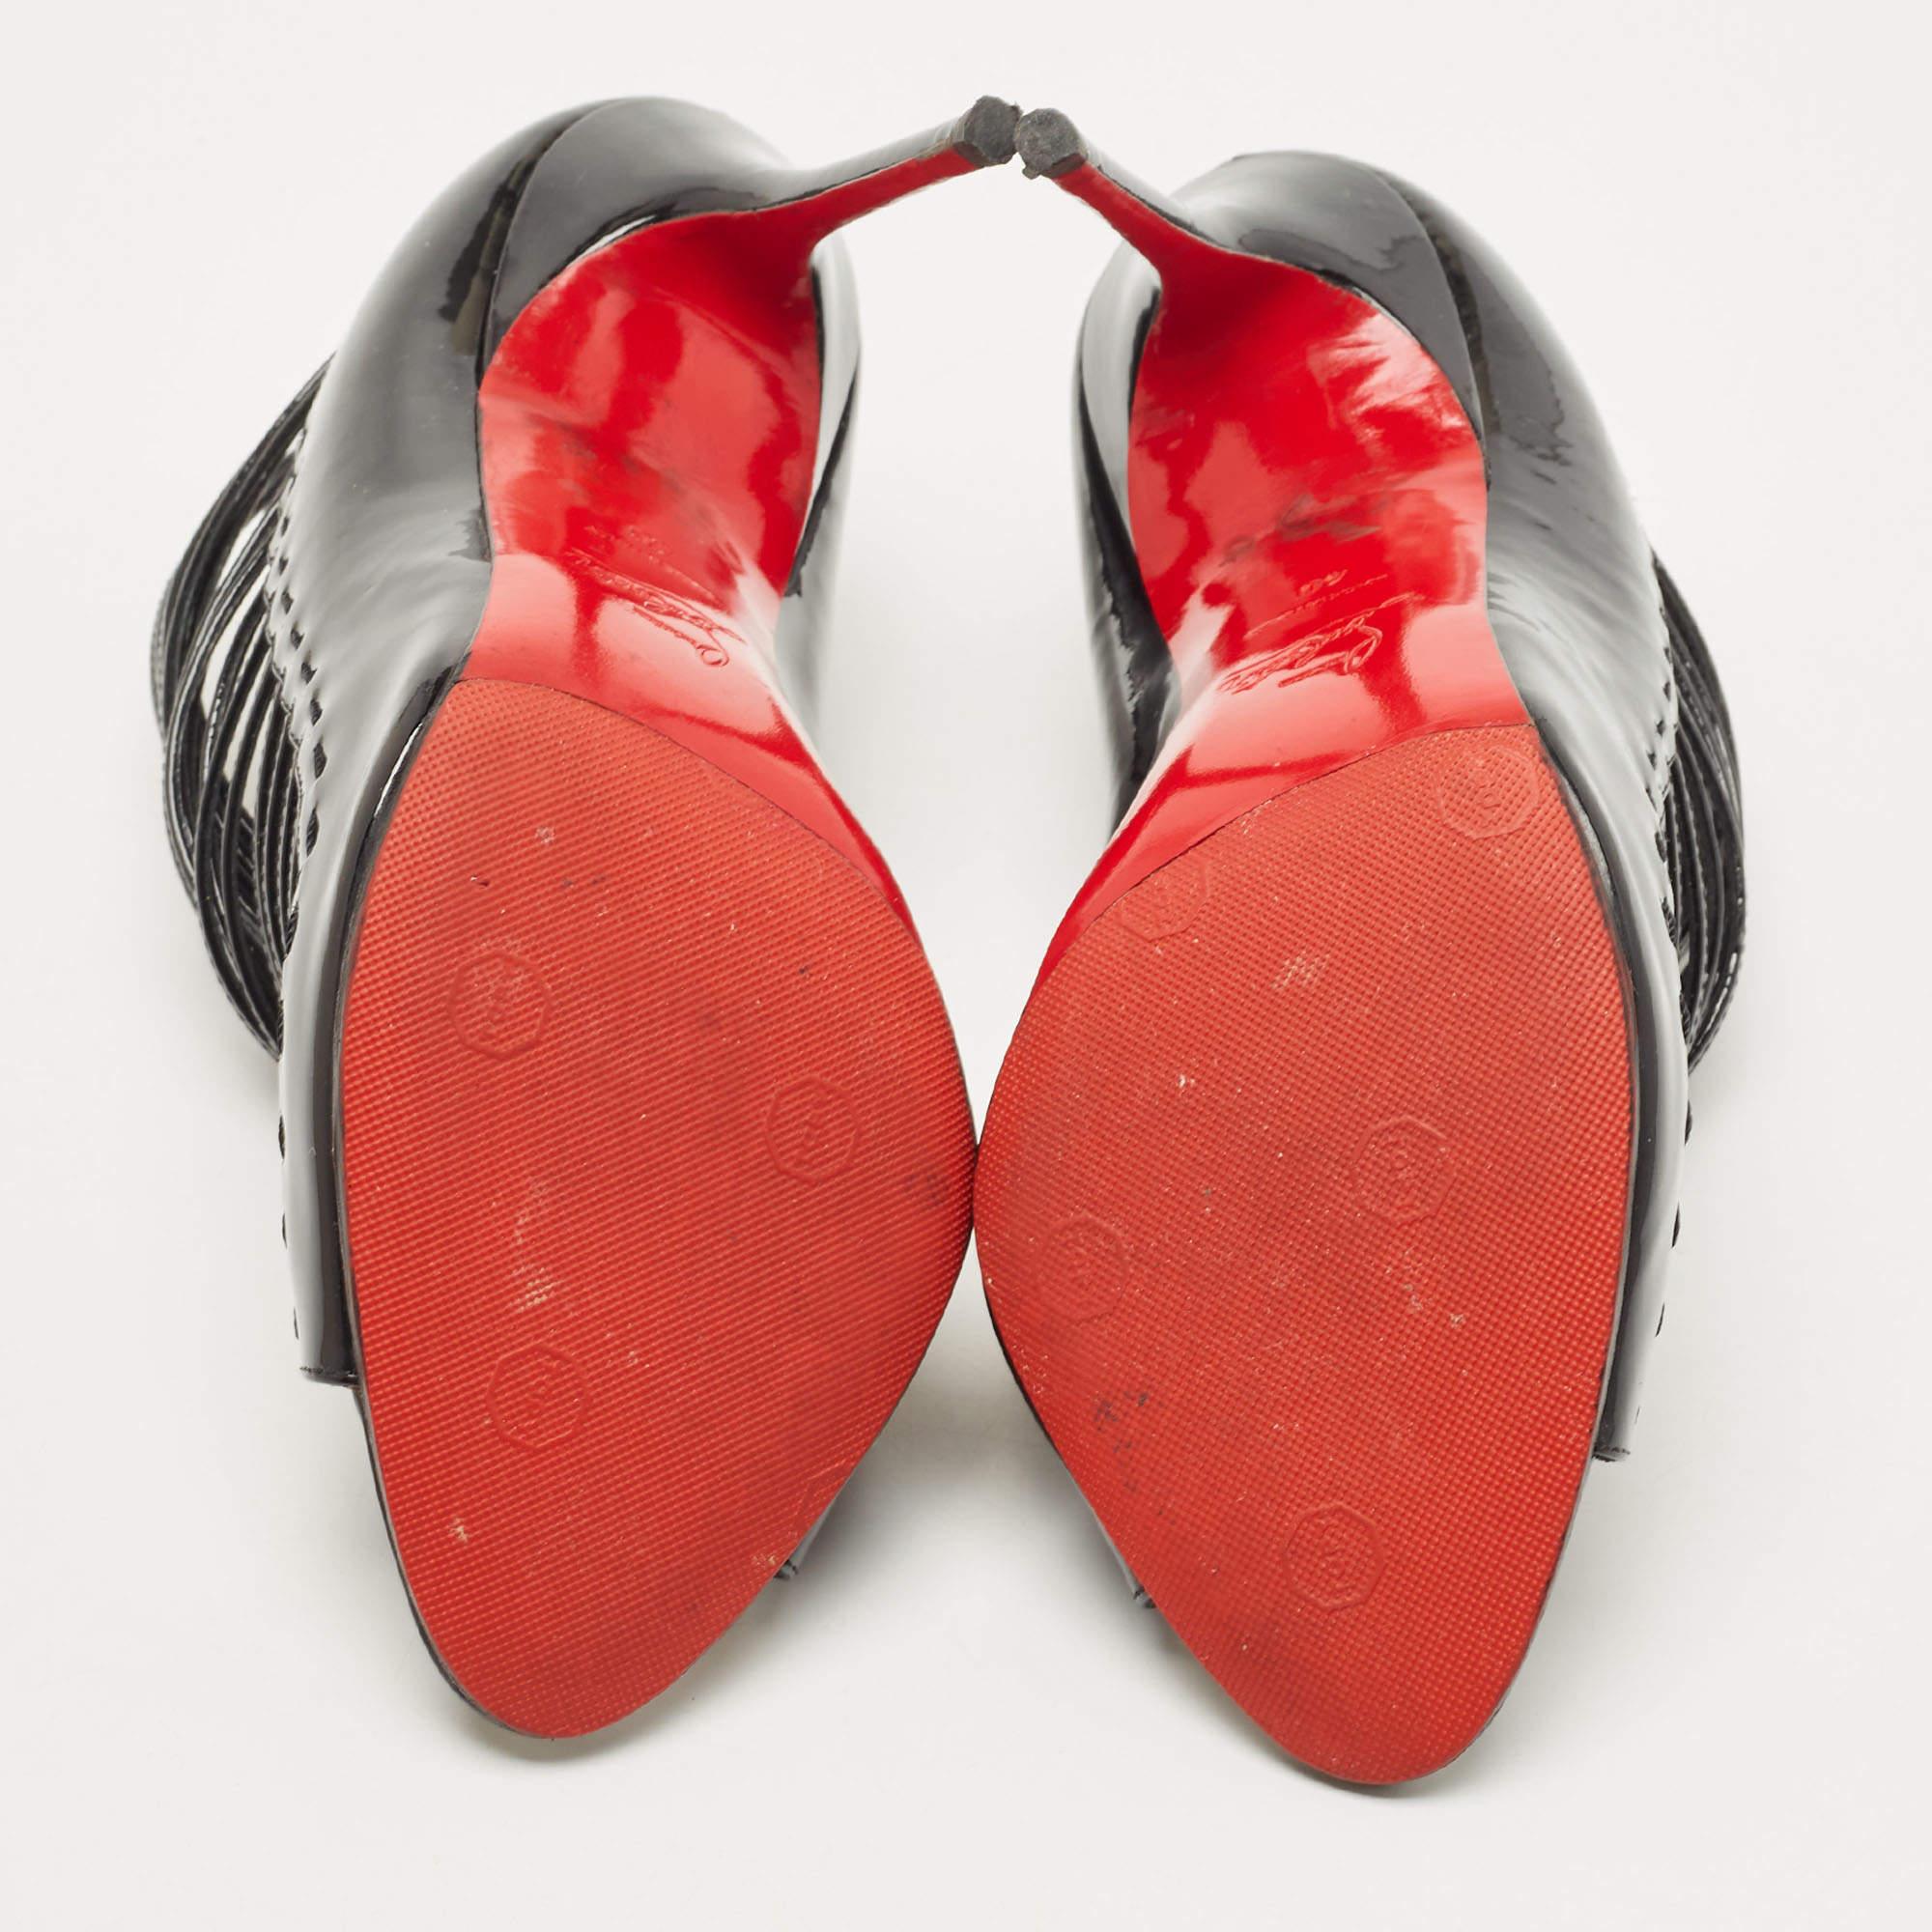 Christian Louboutin Black Patent Gortik Cage Ankle Boots Size 40 4